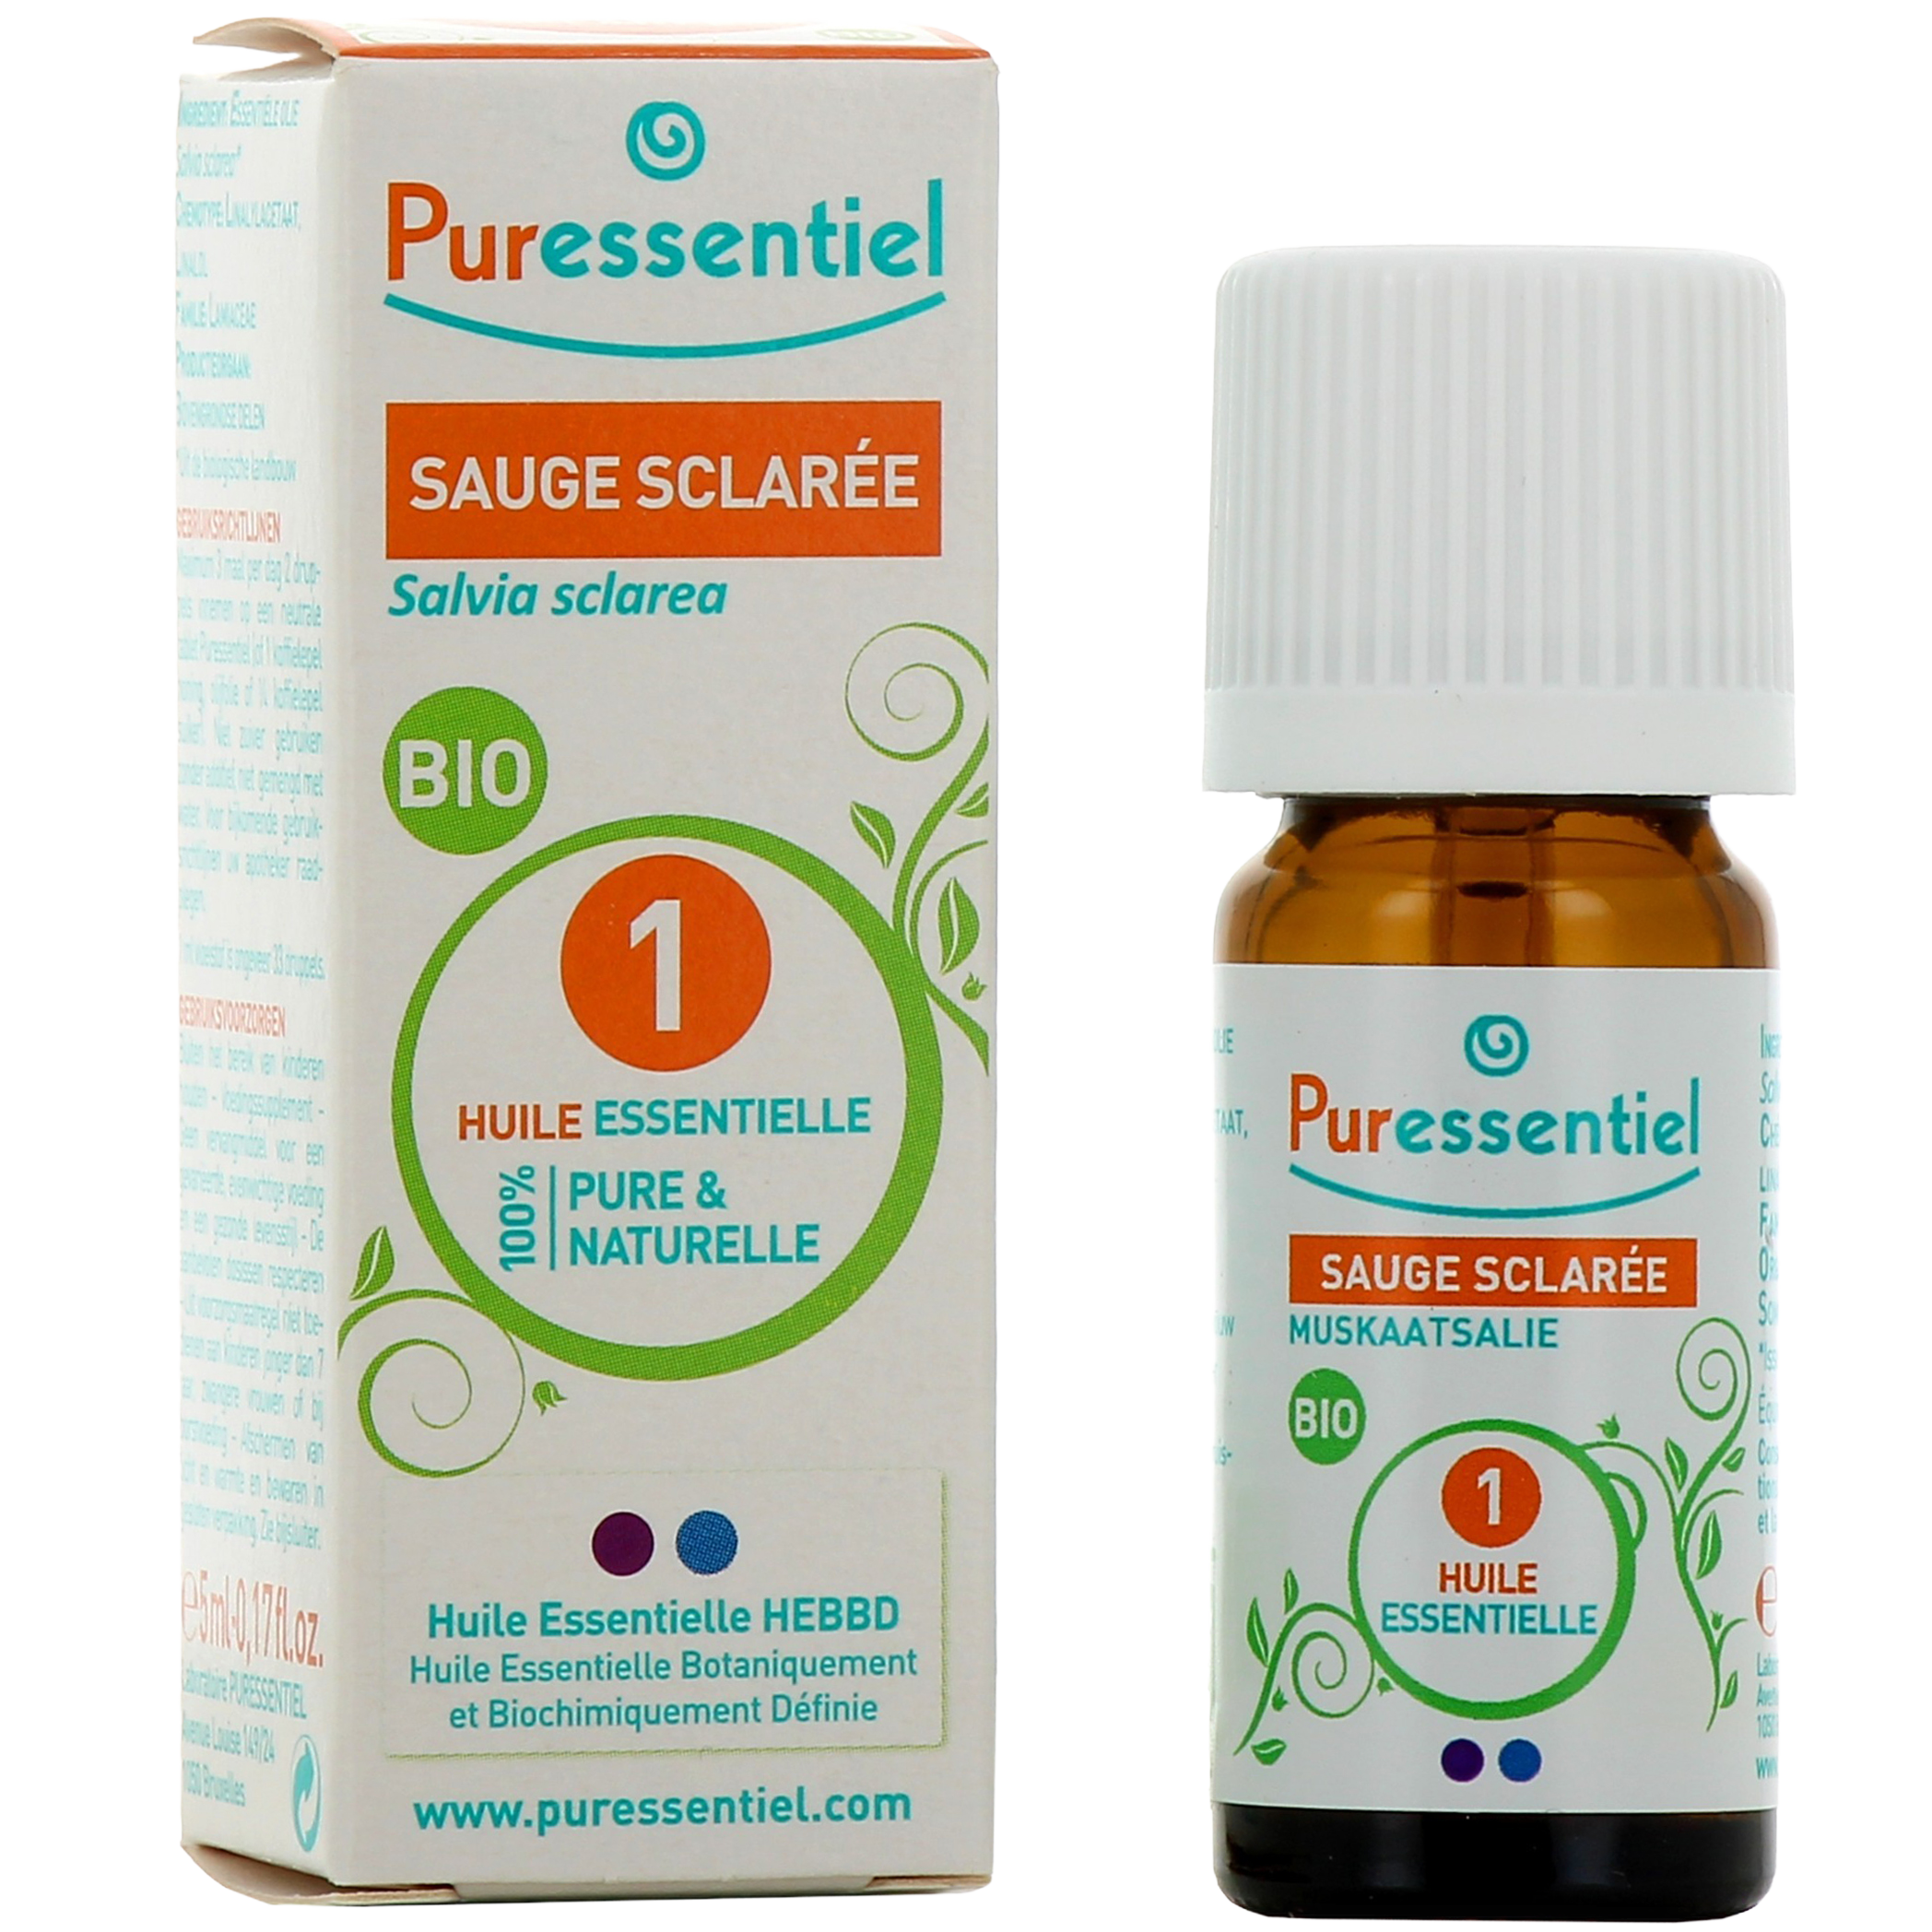 https://cdn.pharmaciedesdrakkars.com/media/images/products/puressentiel-sauge-sclaree-bio-huile-essentielle-puressentiel4-1691139798.jpg